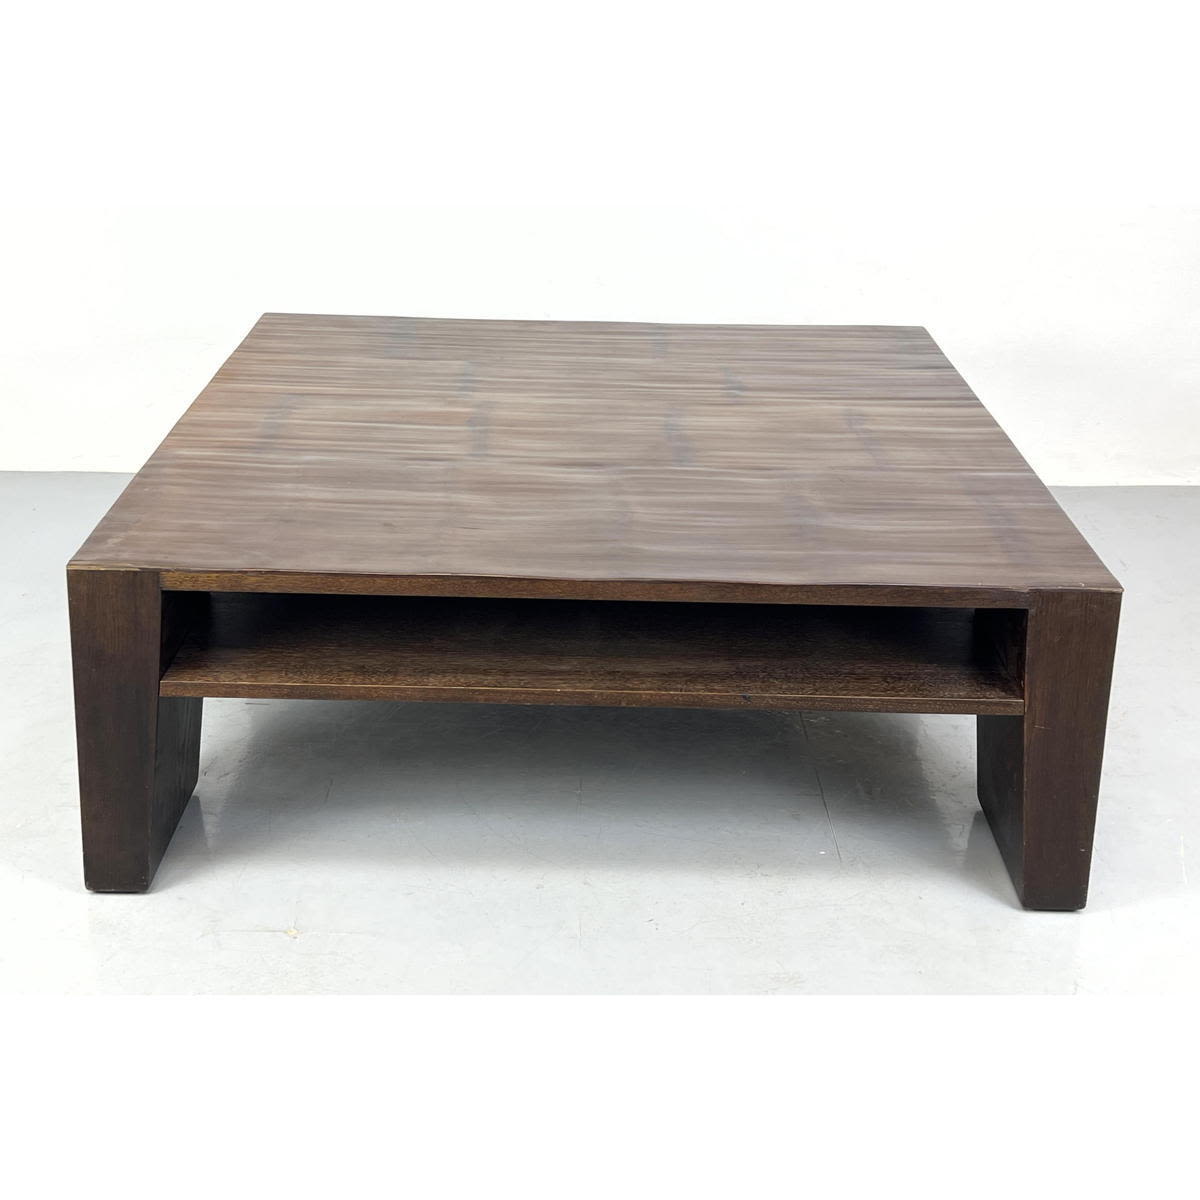 Large split Bamboo coffee table 2b85c7